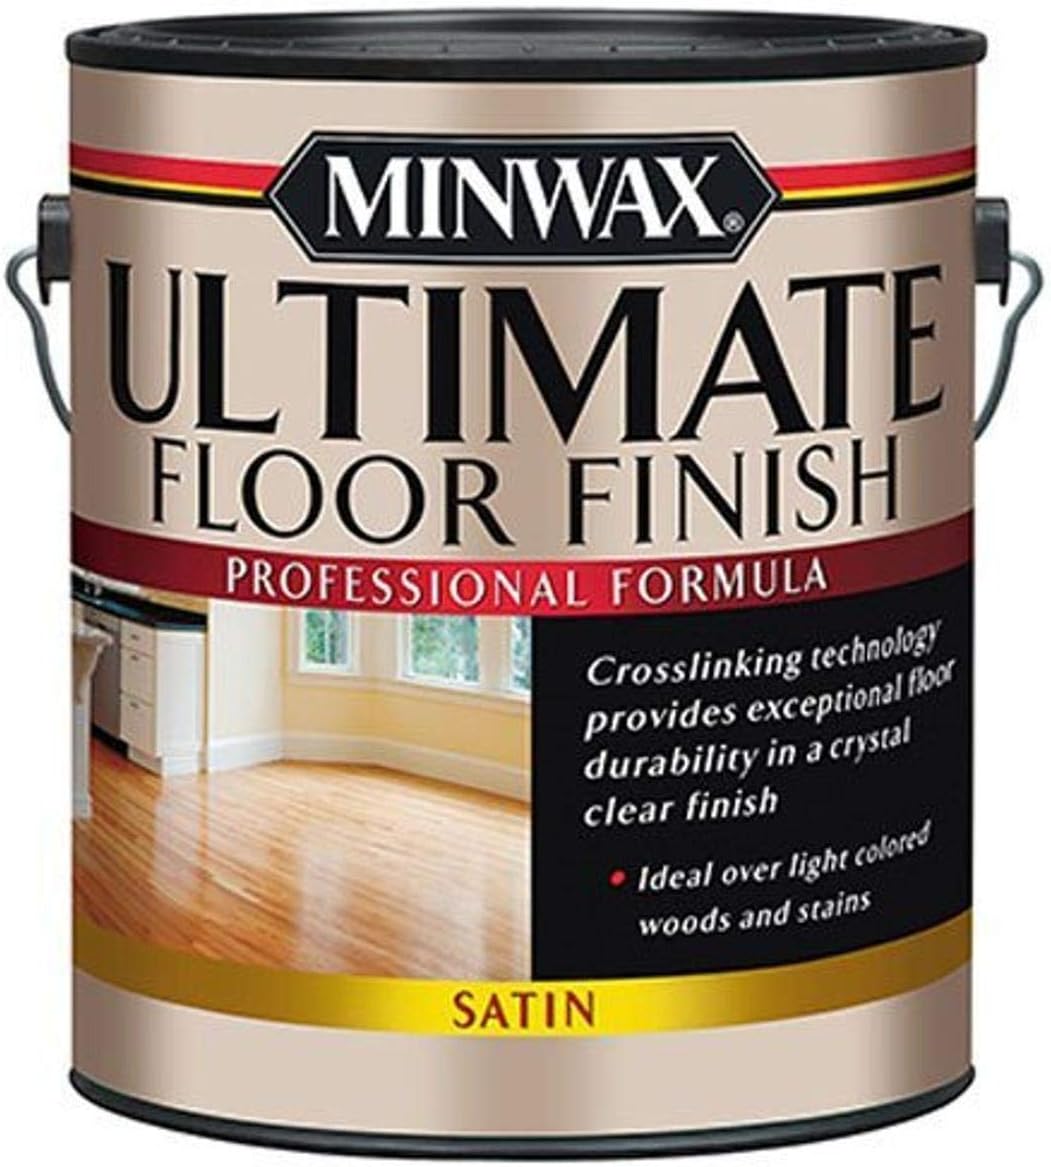 polyurethane floor finish product review